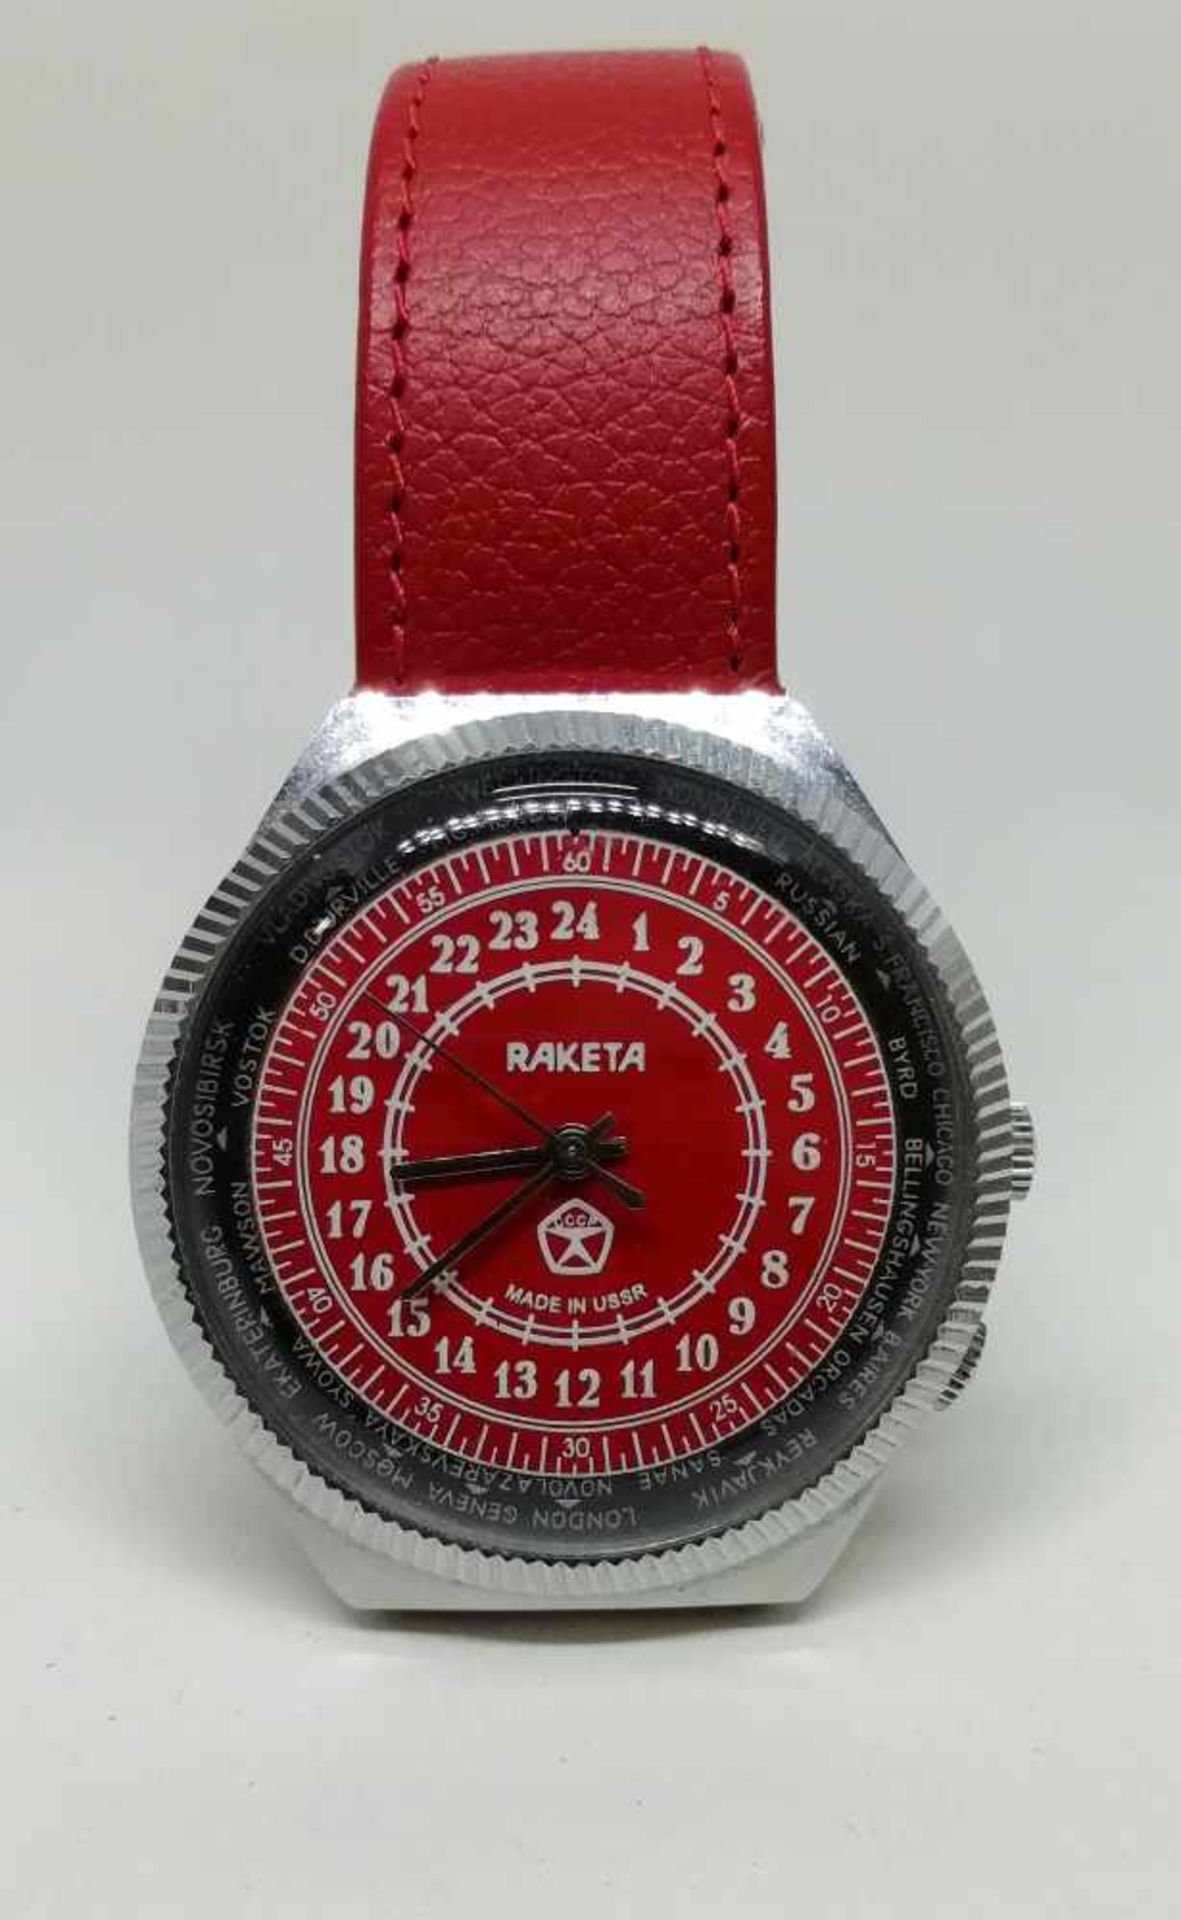 HerrenarmbanduhrMetall, Marke Raketa, Ankerwerk, rotes Lederband, Zifferblatt rot, 54,6g,